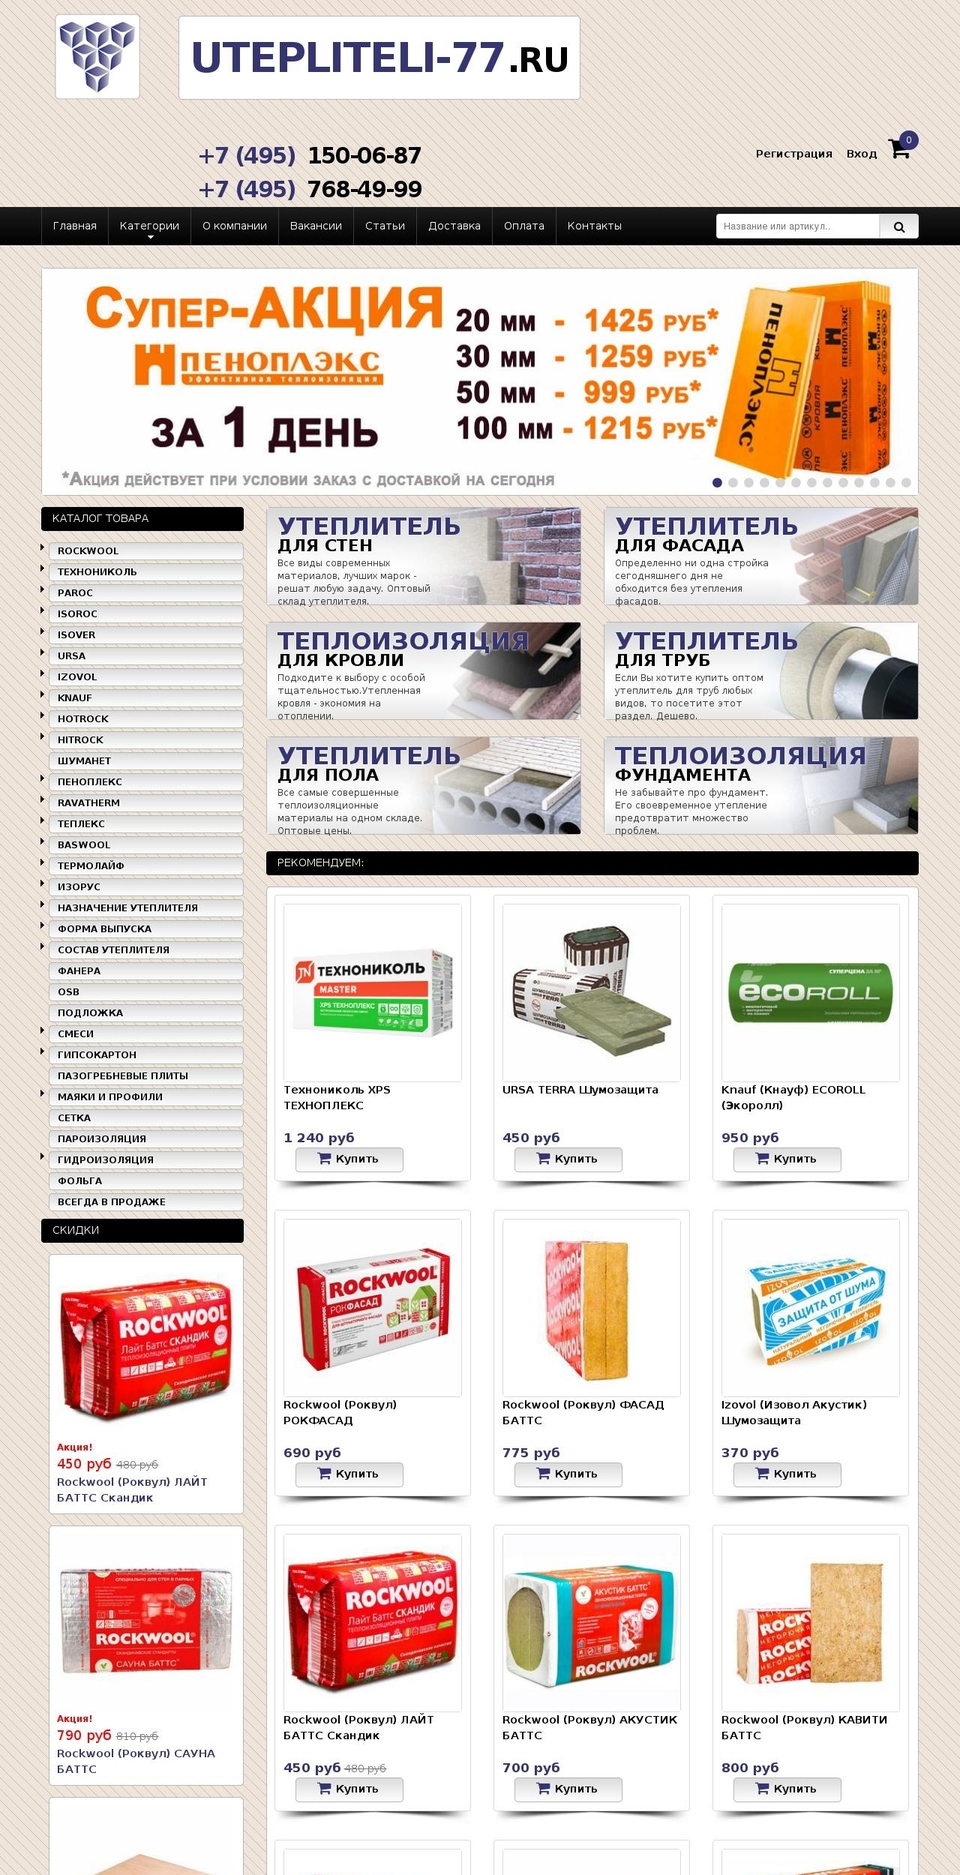 utepliteli77.ru shopify website screenshot